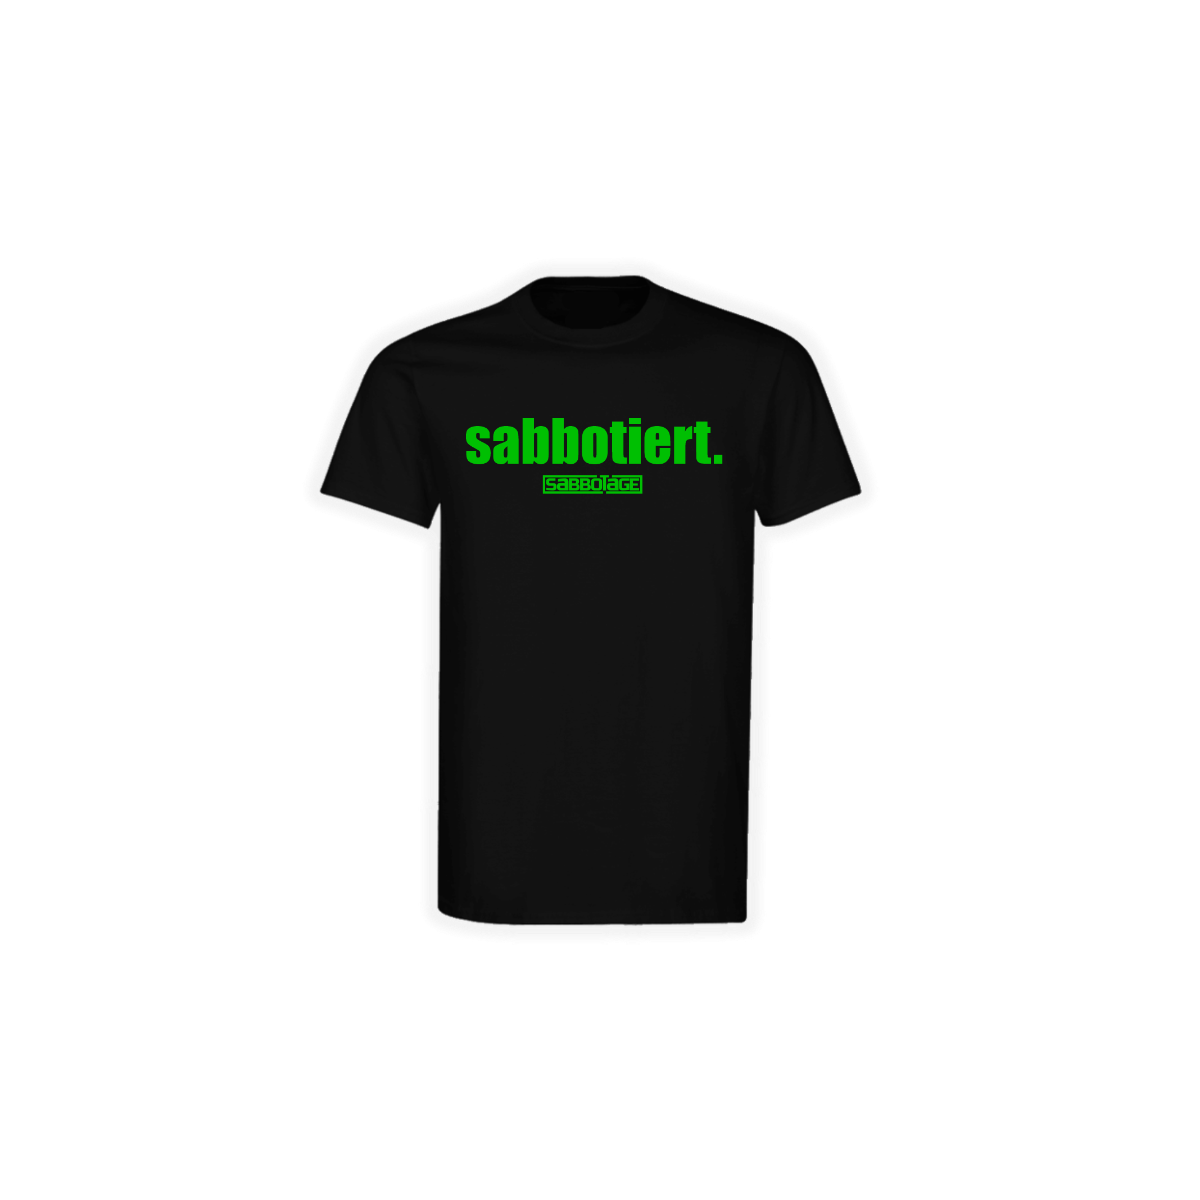 T-Shirt "SABBOTIERT." schwarz